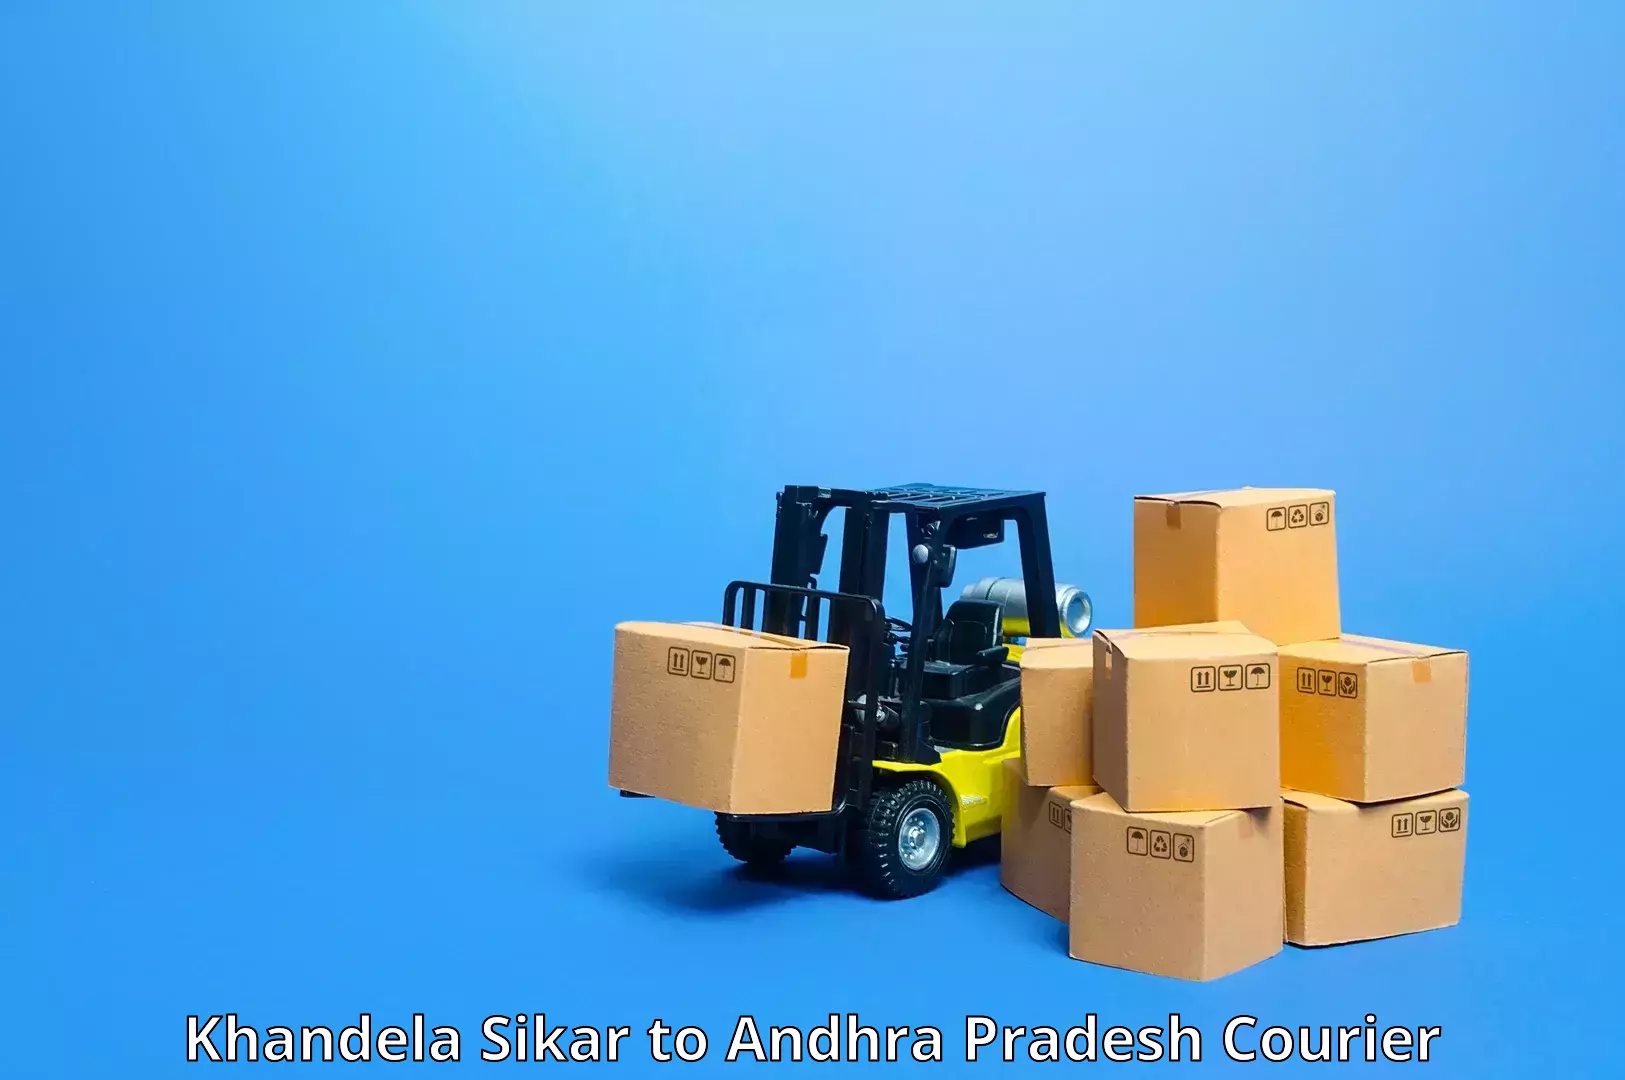 Express shipping in Khandela Sikar to Kandukur